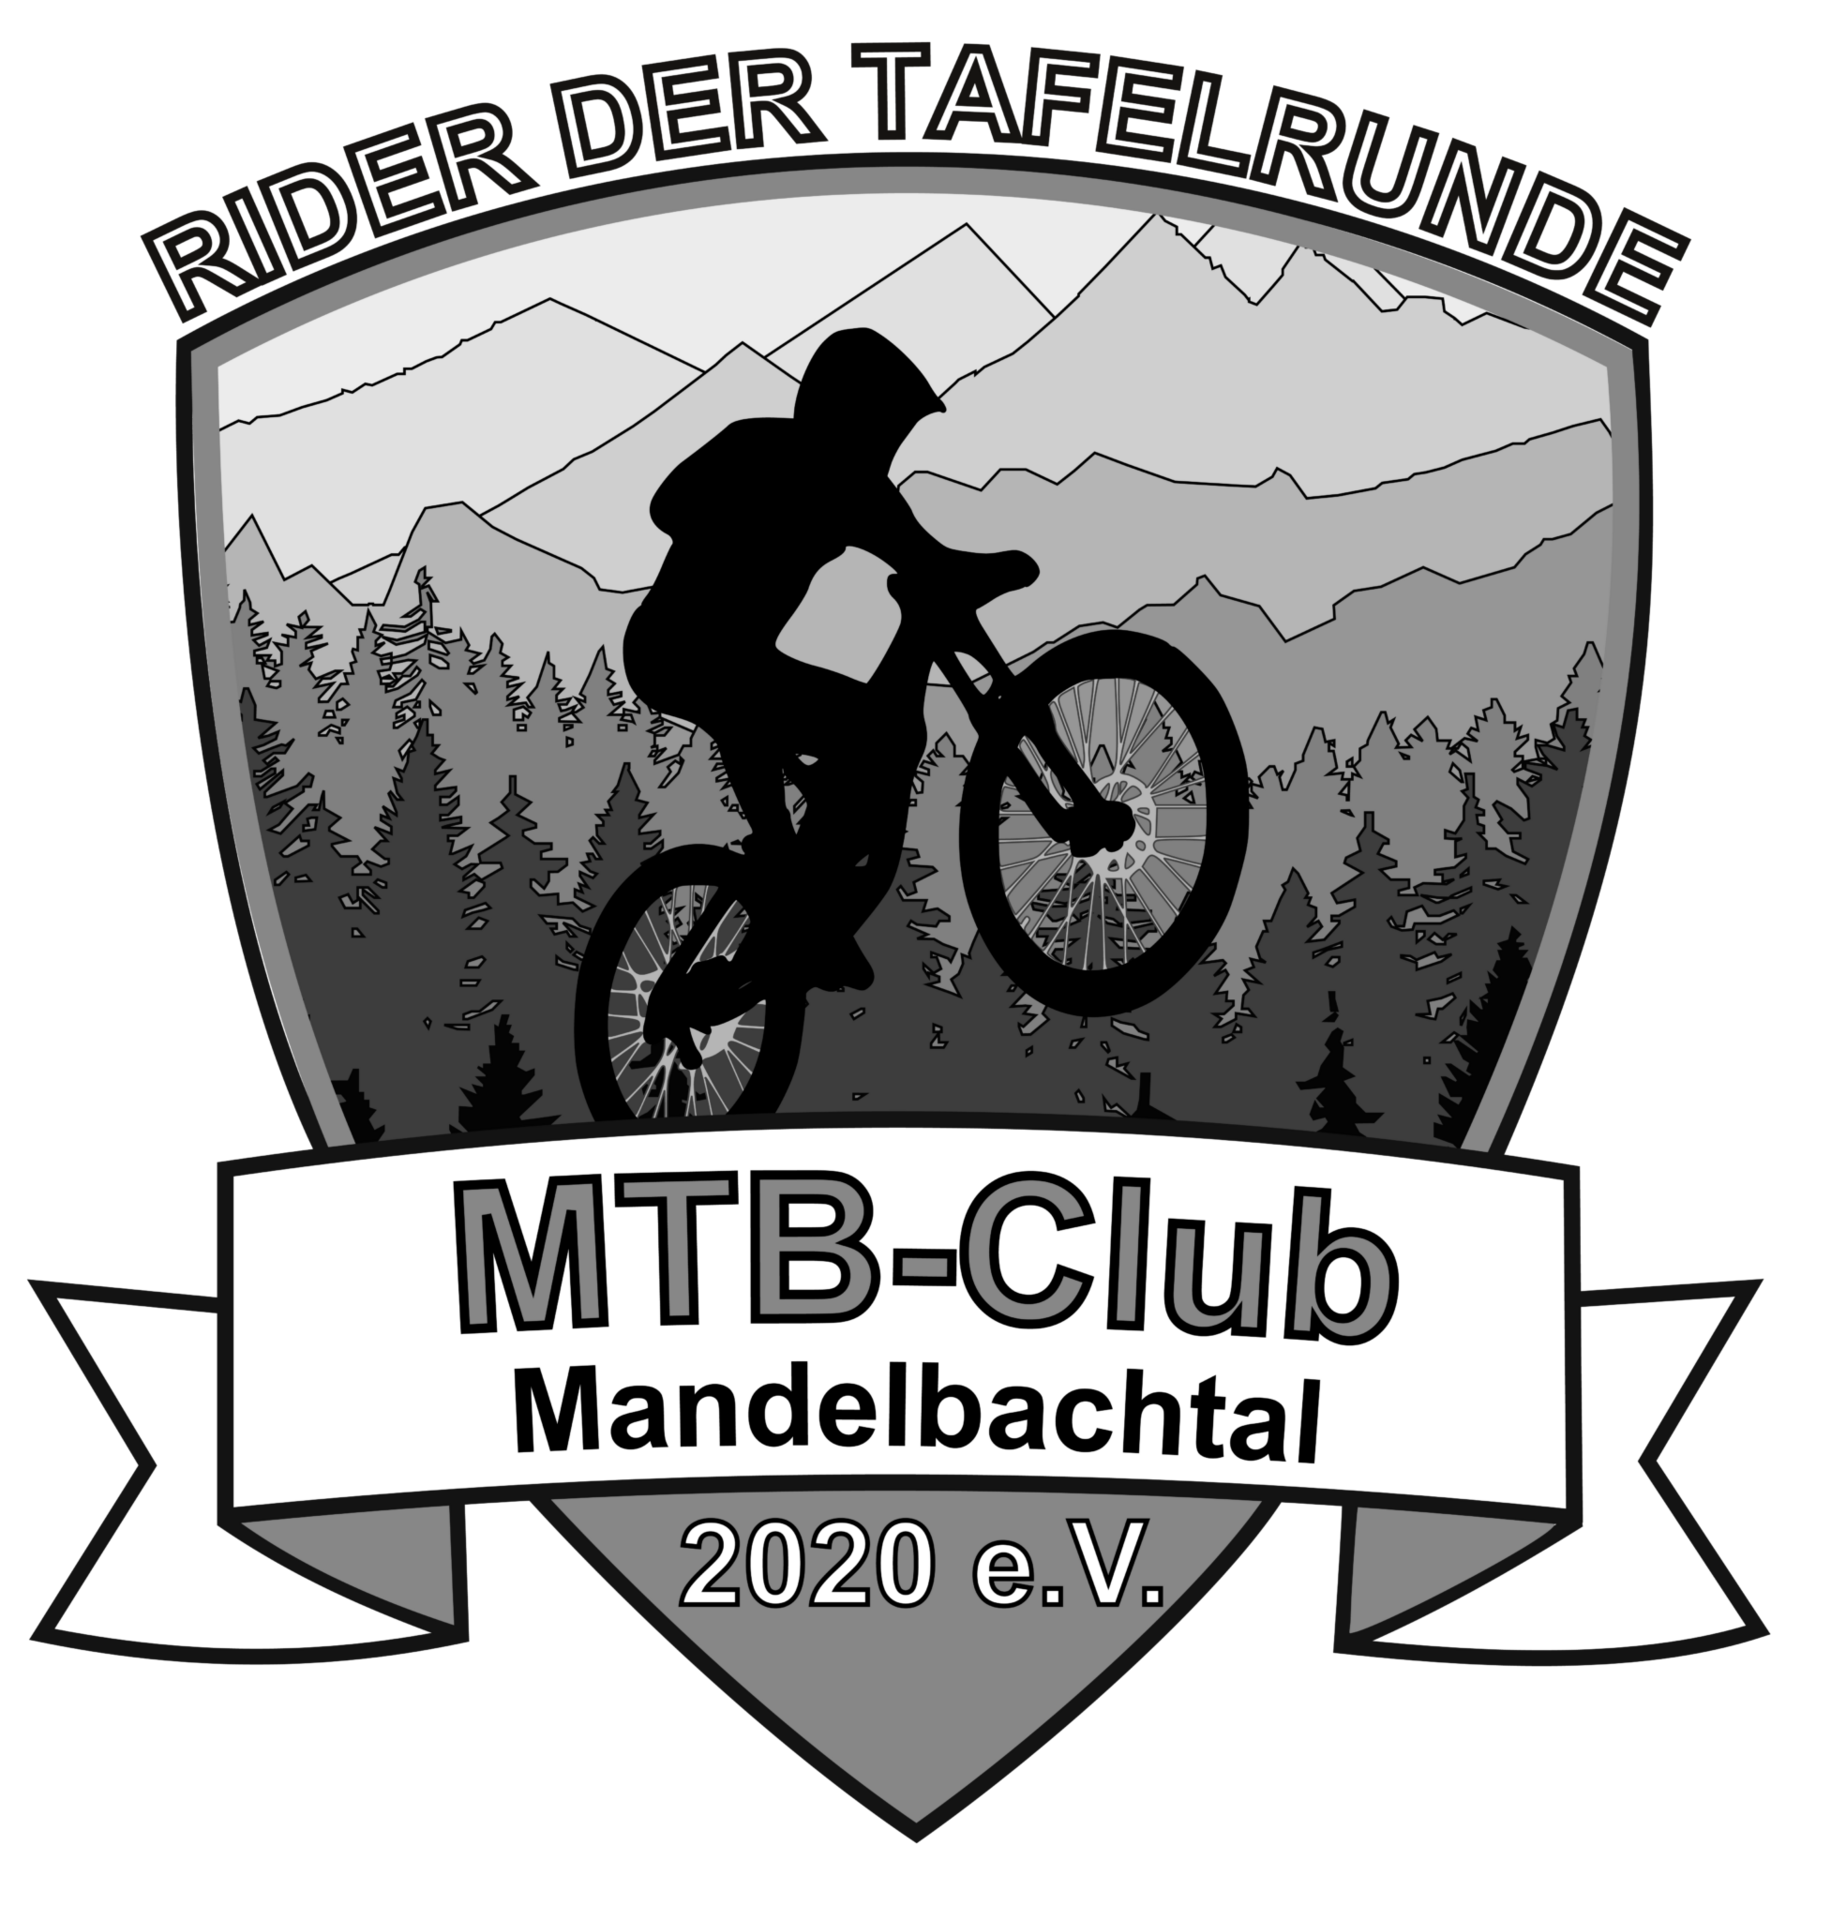 Rider der Tafelrunde Mandelbachtal